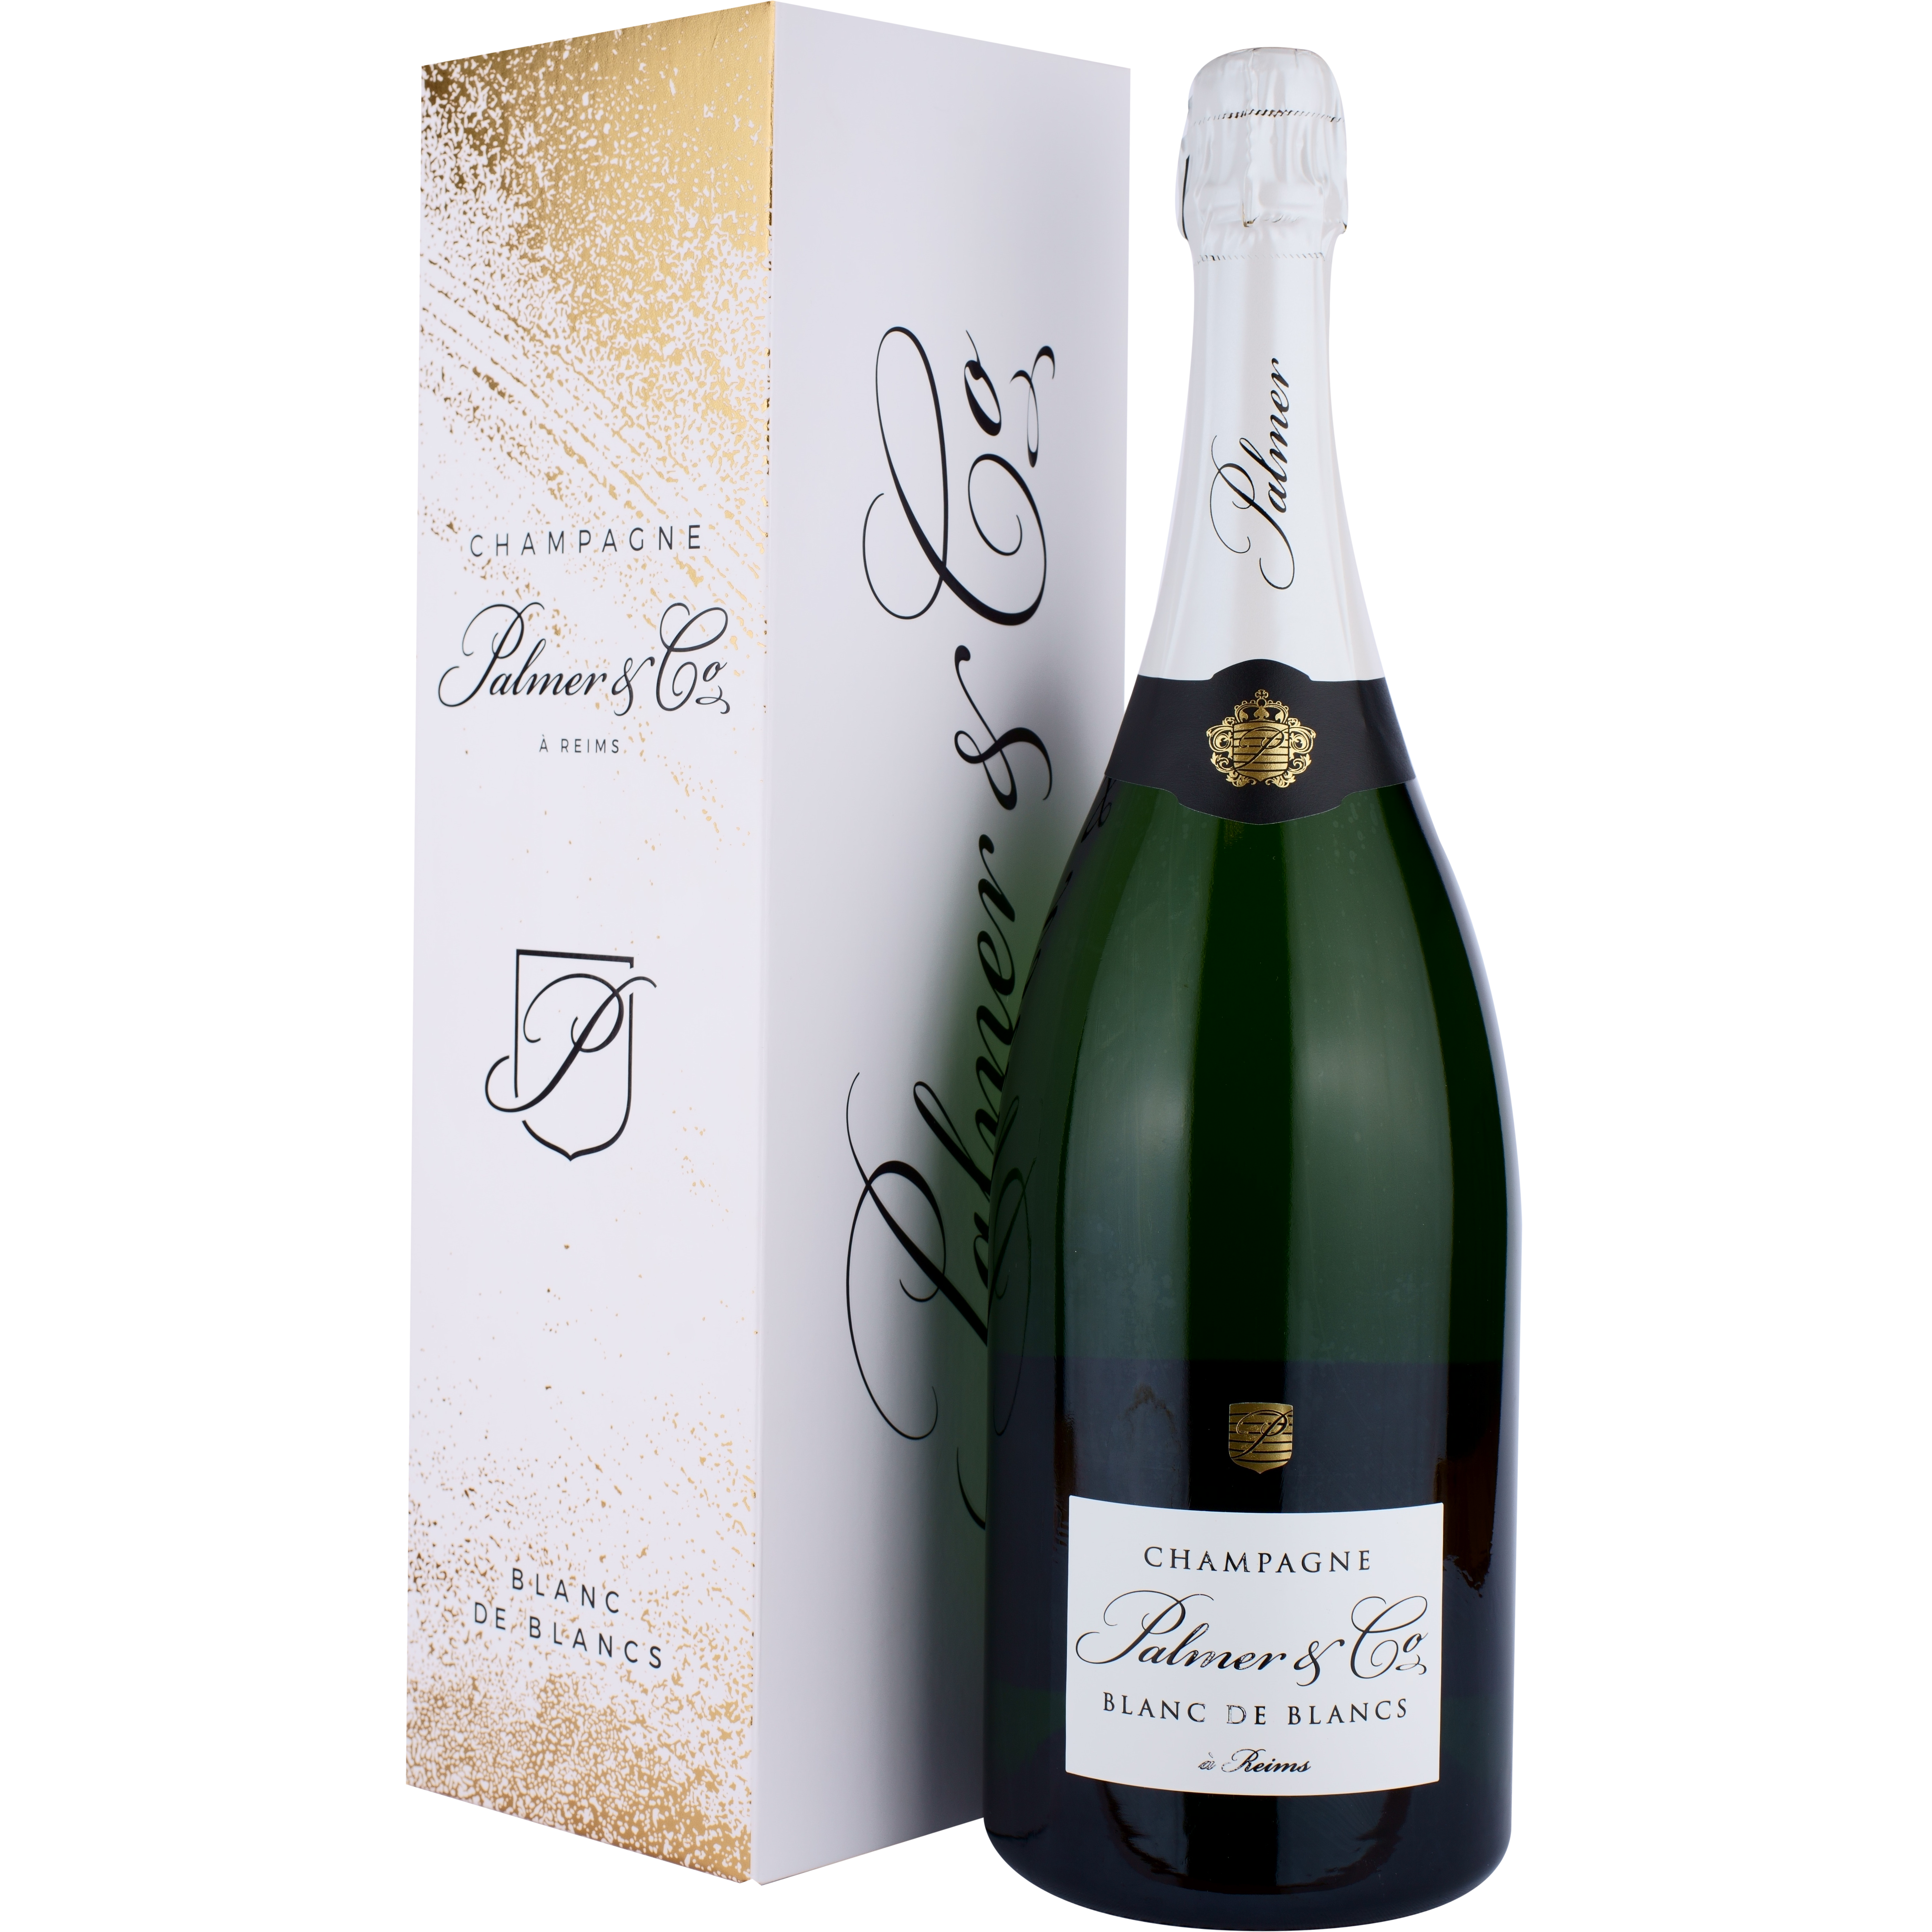 Шампанське Palmer & CoChampagne Brut Blanc de Blancs AOC, біле, брют, 1,5 л - фото 1